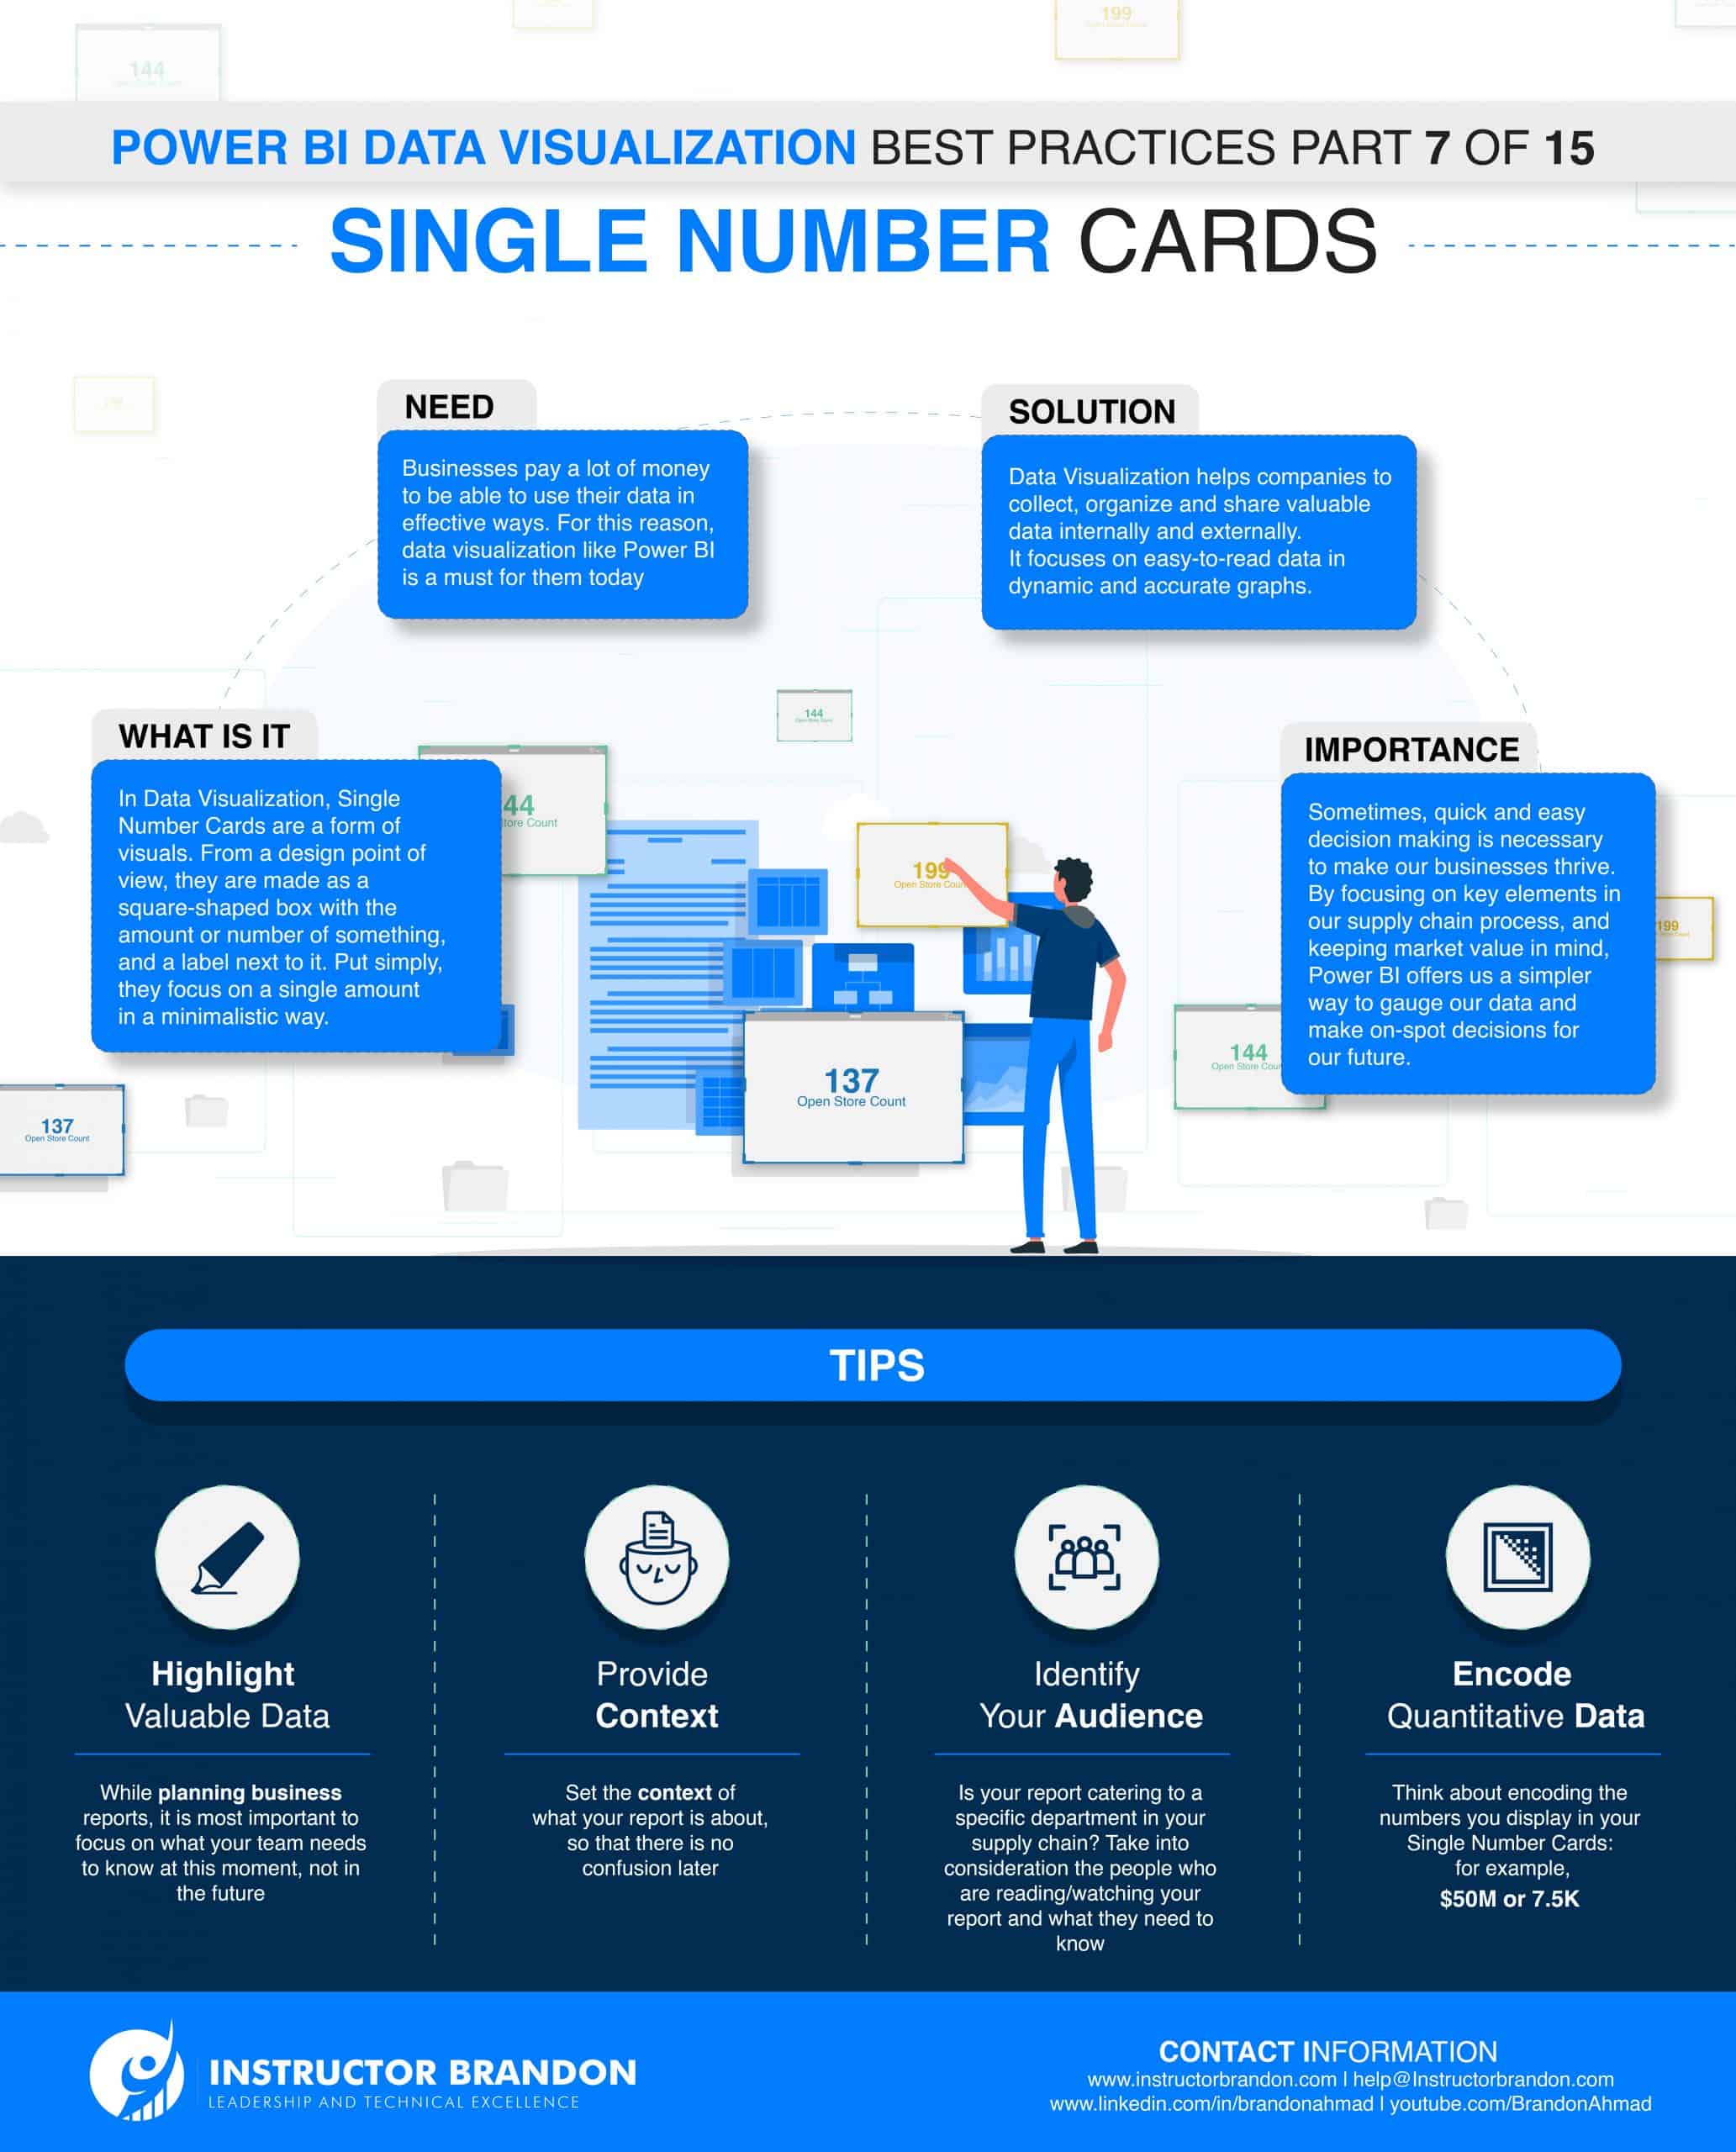 Single Number Cards using Microsoft Power BI